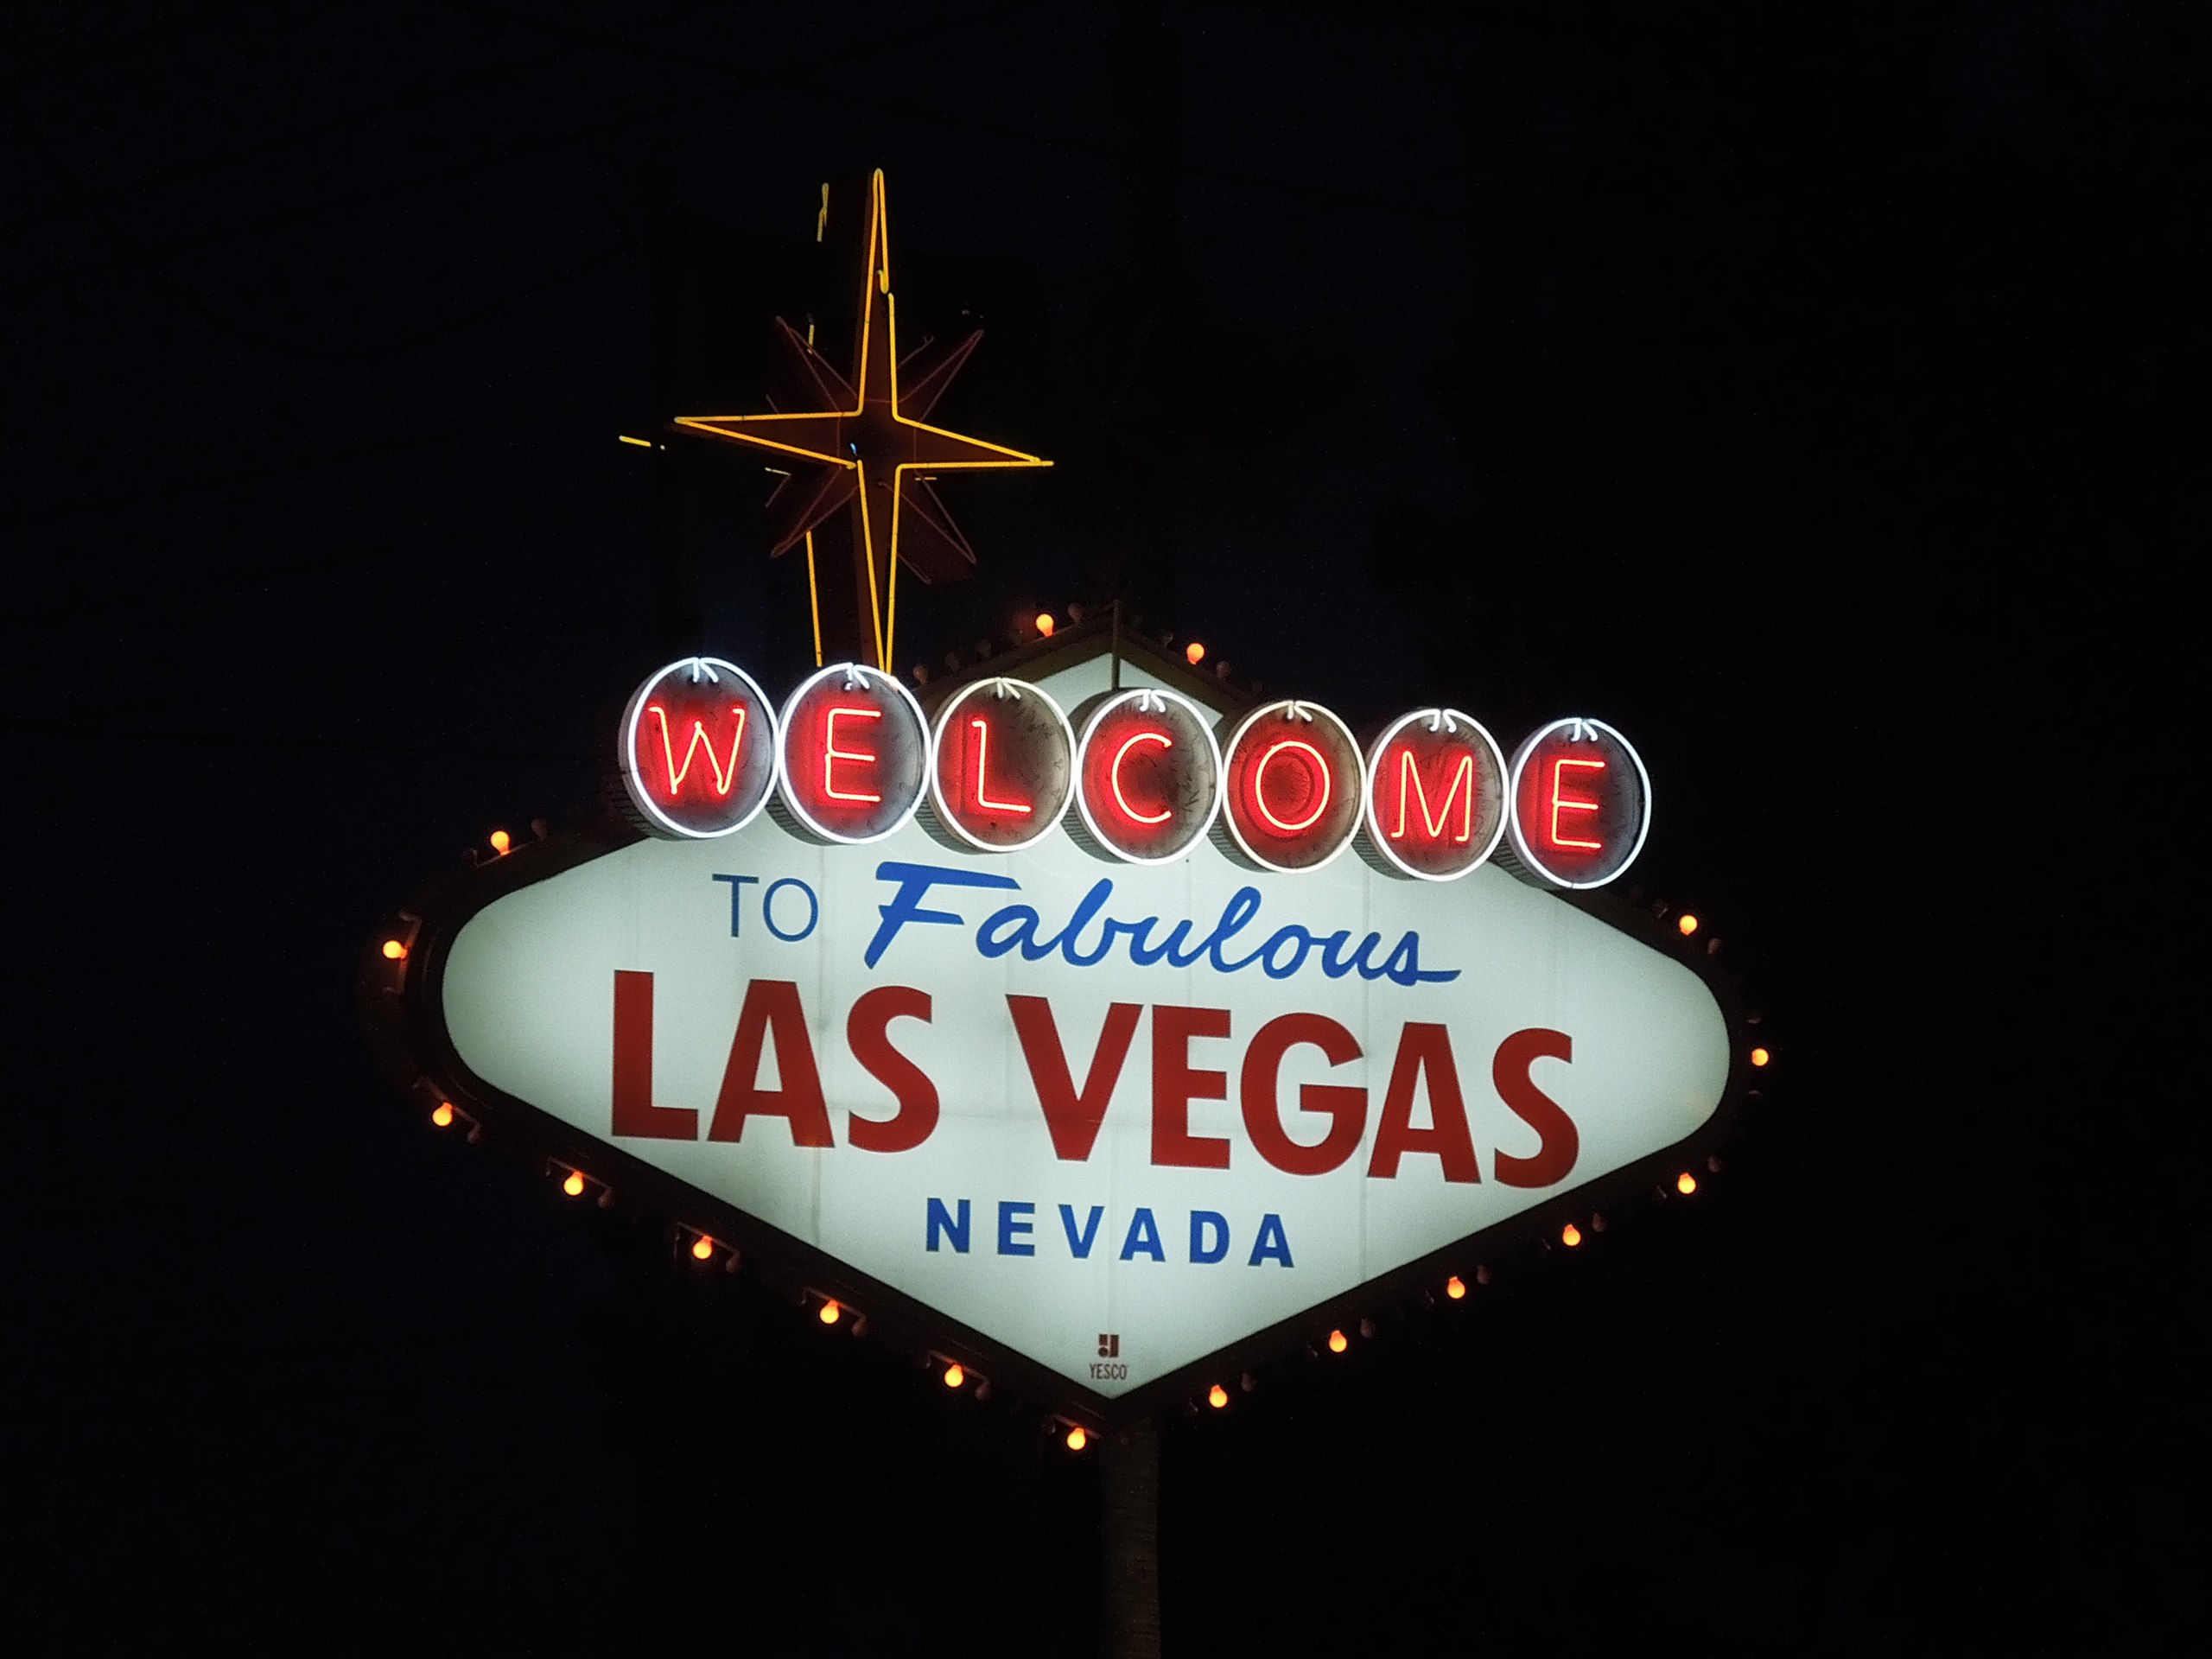 Las Vegas sign night by naturebe on DeviantArt